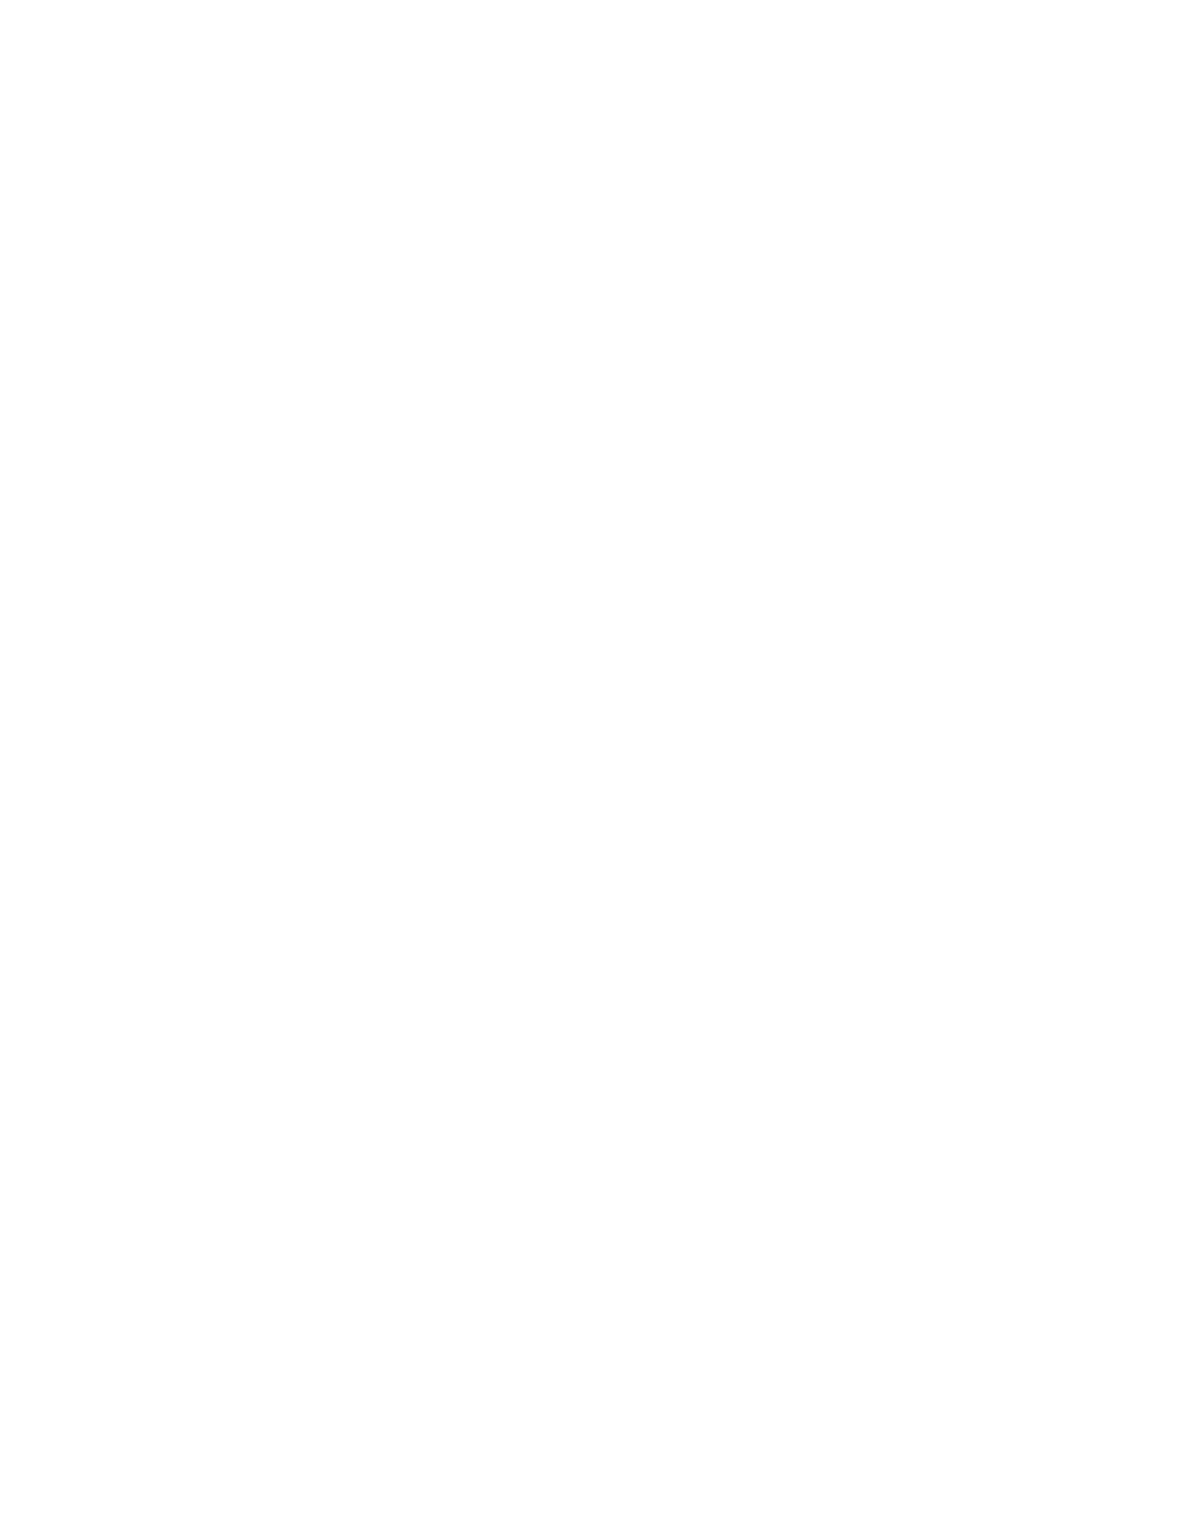 Mr Mitre